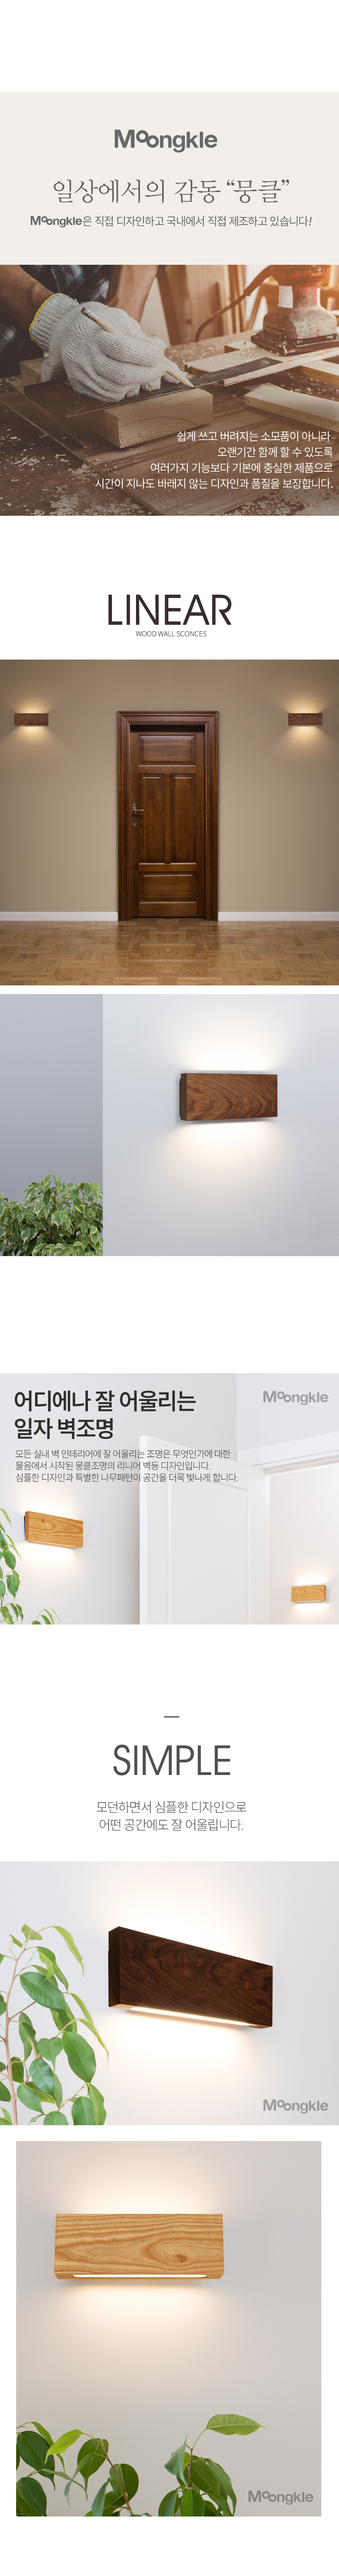 220822-linearwalllamp-01_140442.jpg